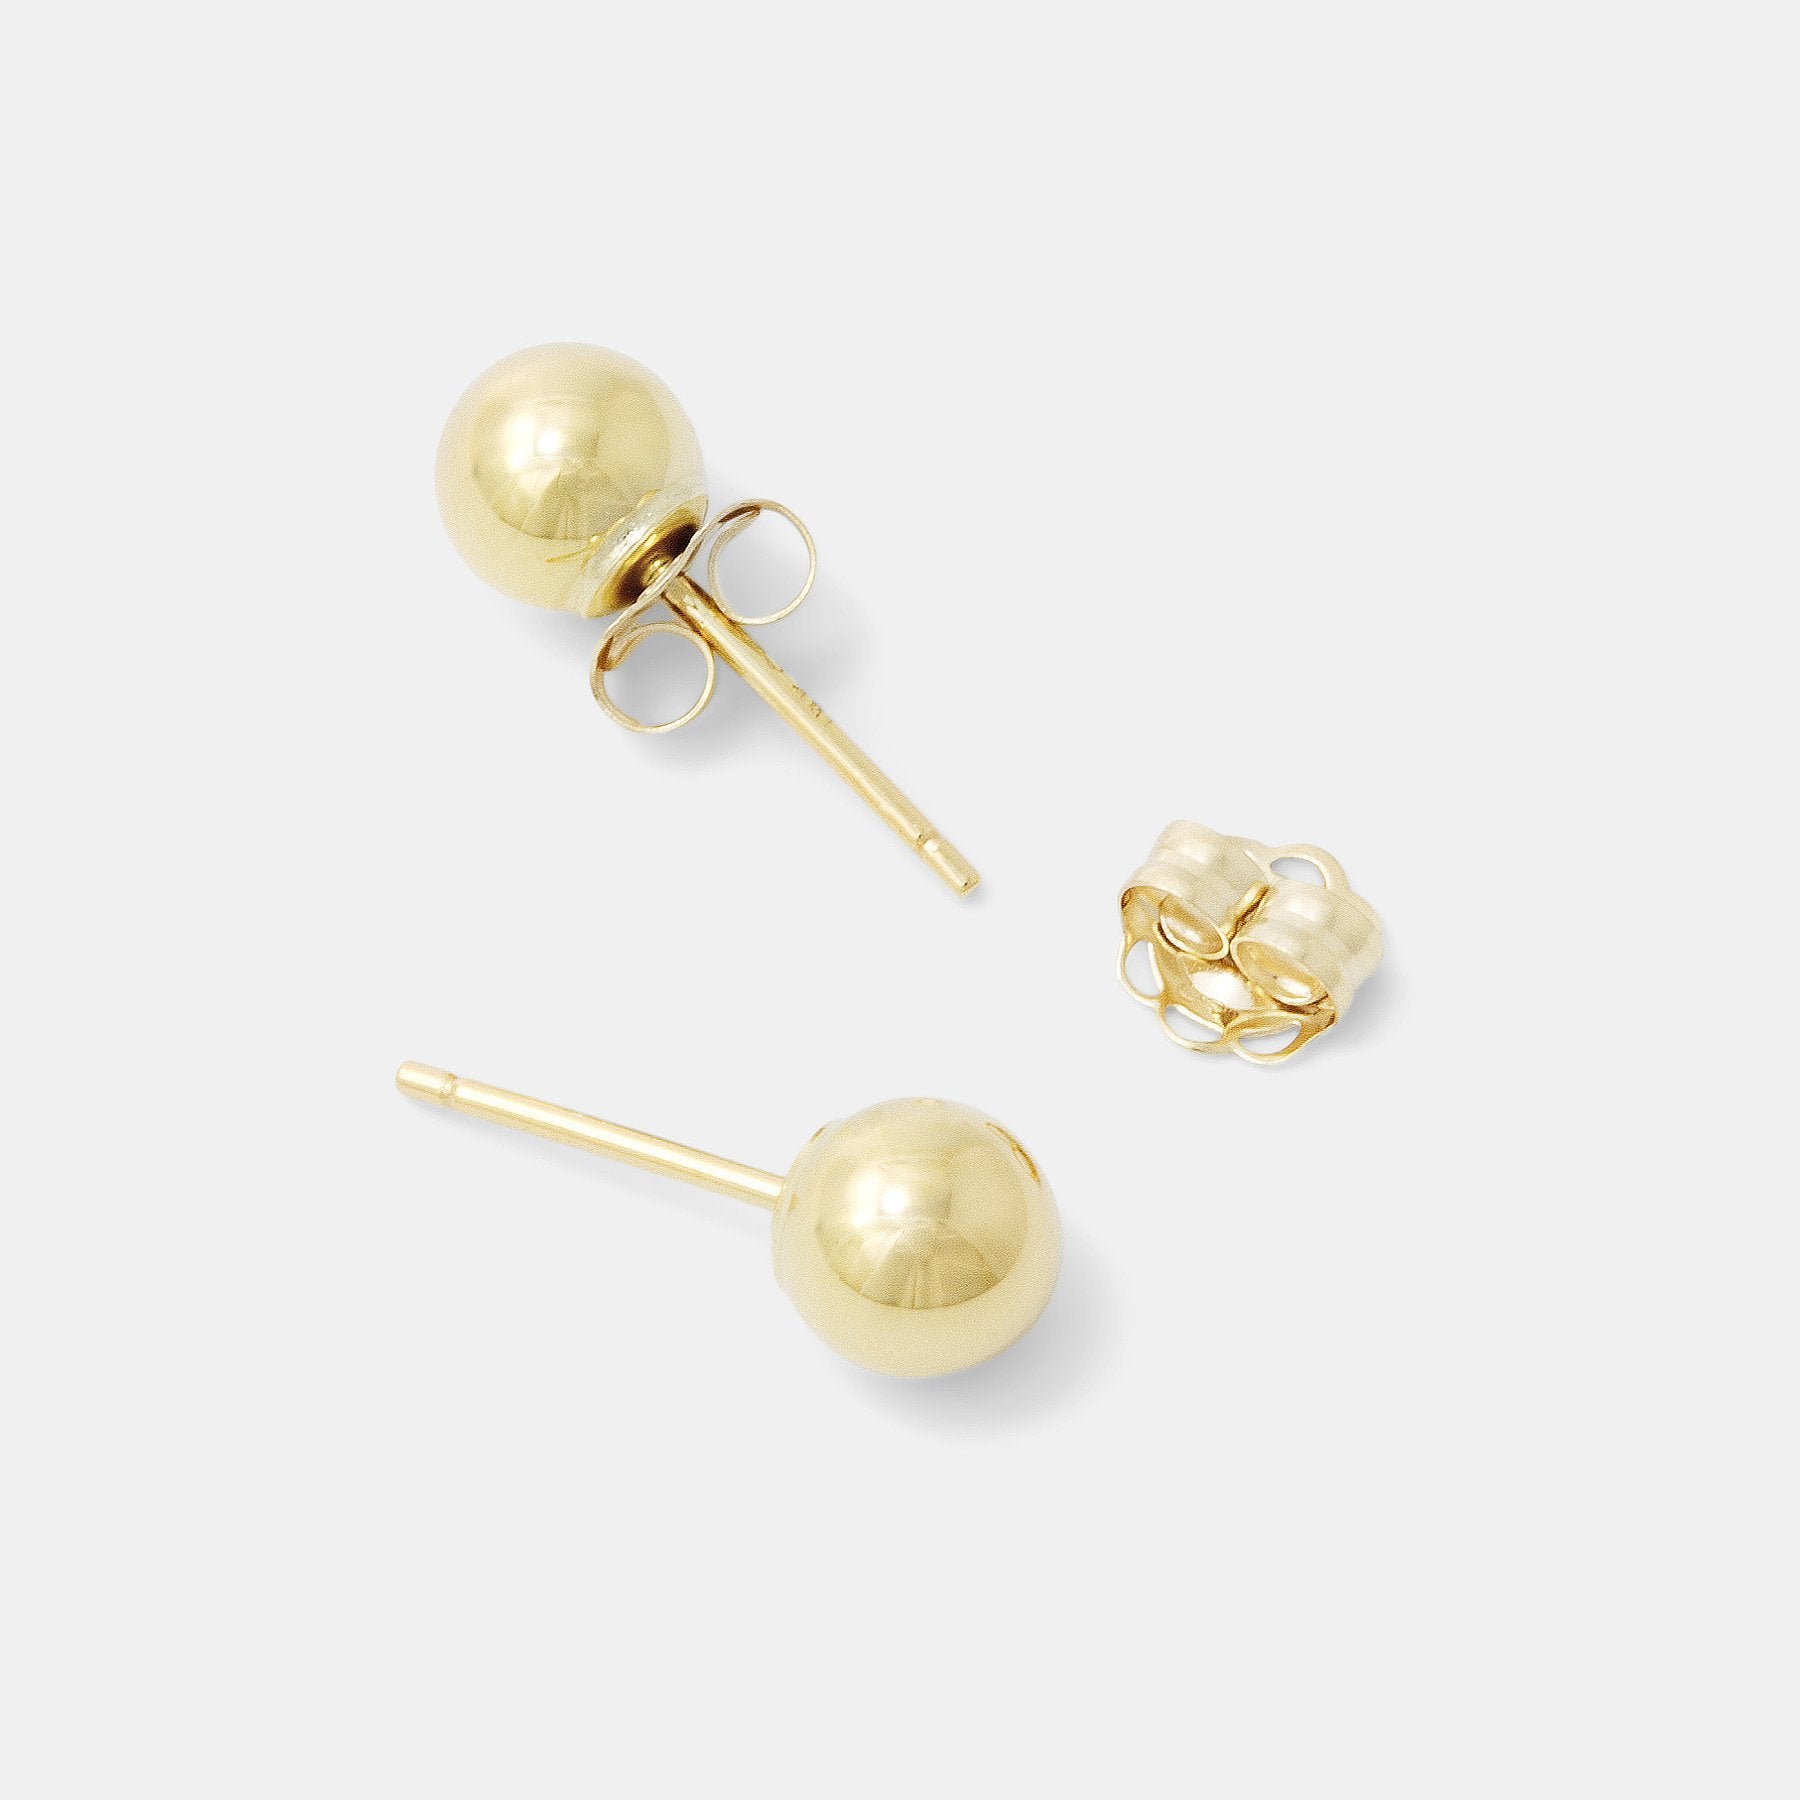 Ball stud large earrings: gold - Simone Walsh Jewellery Australia